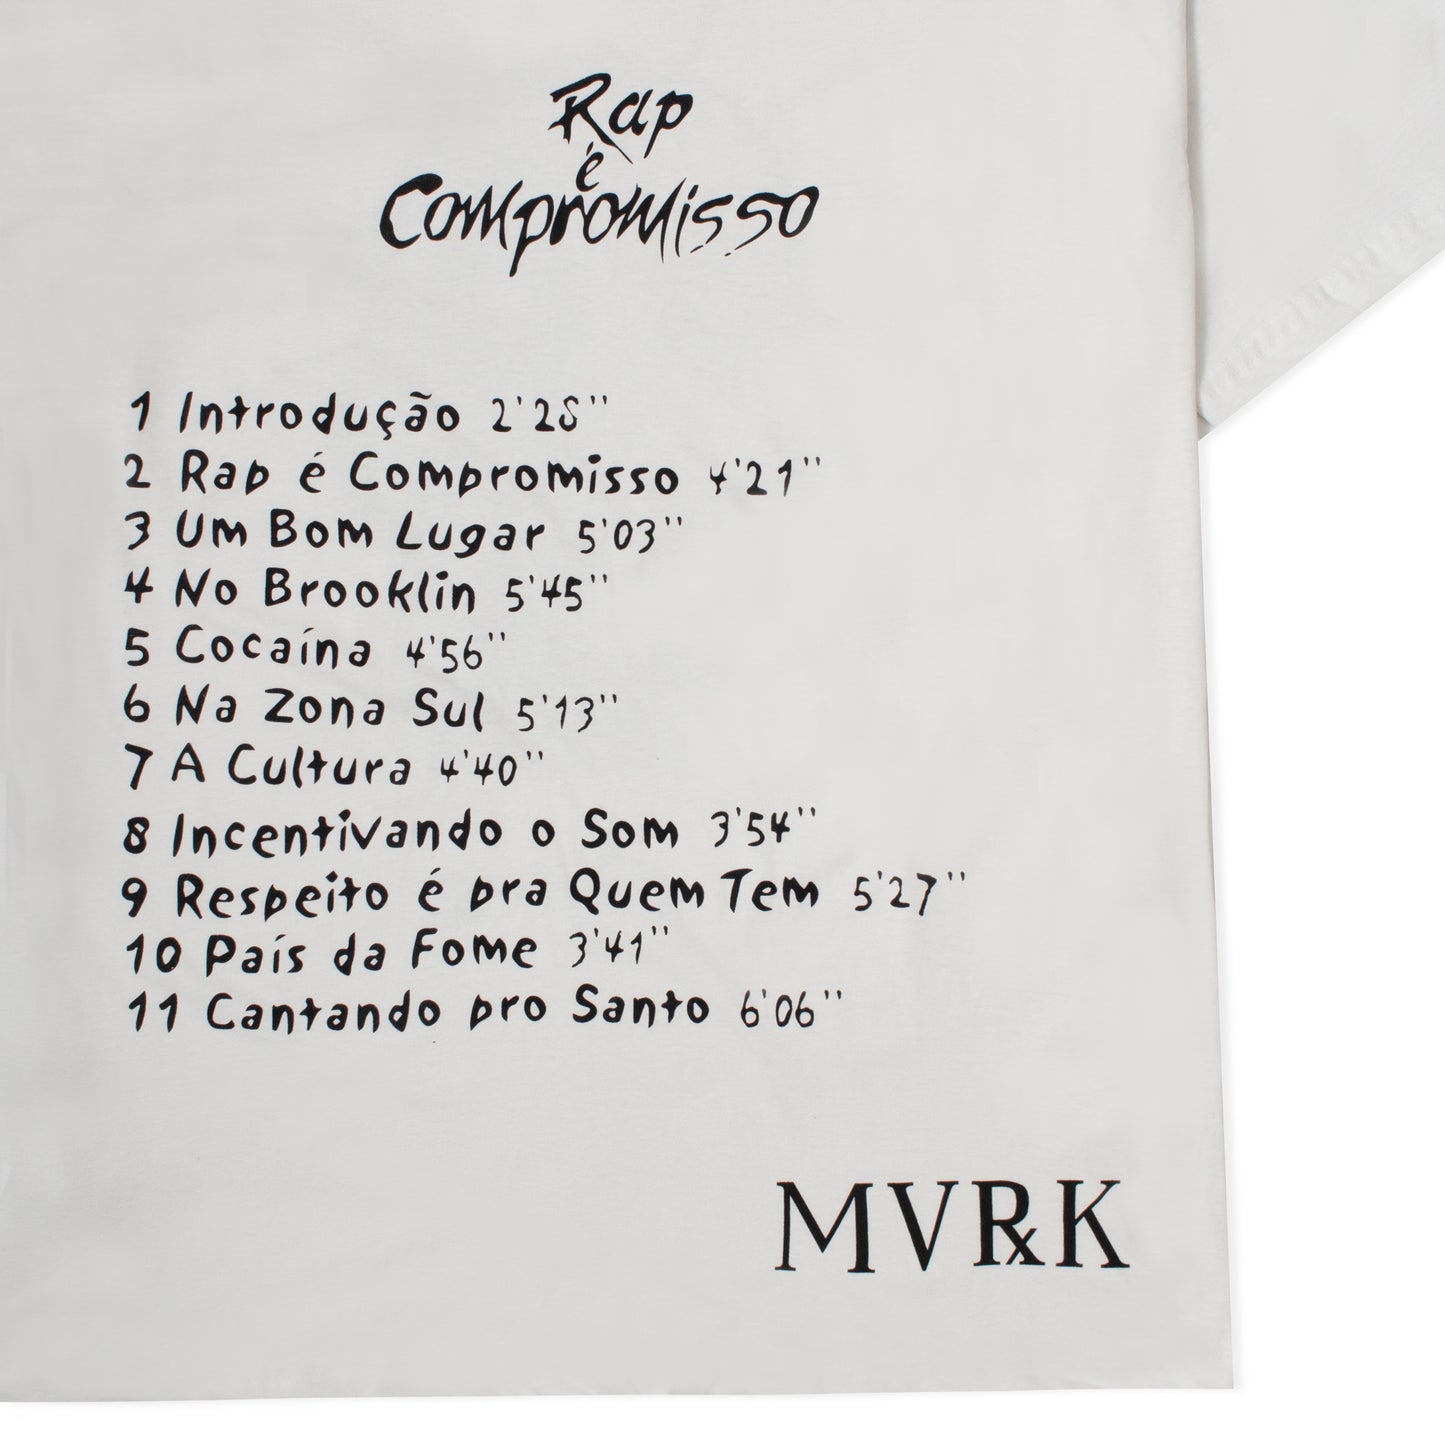 Camiseta MVRK x SABOTAGE Rap É Compromisso II